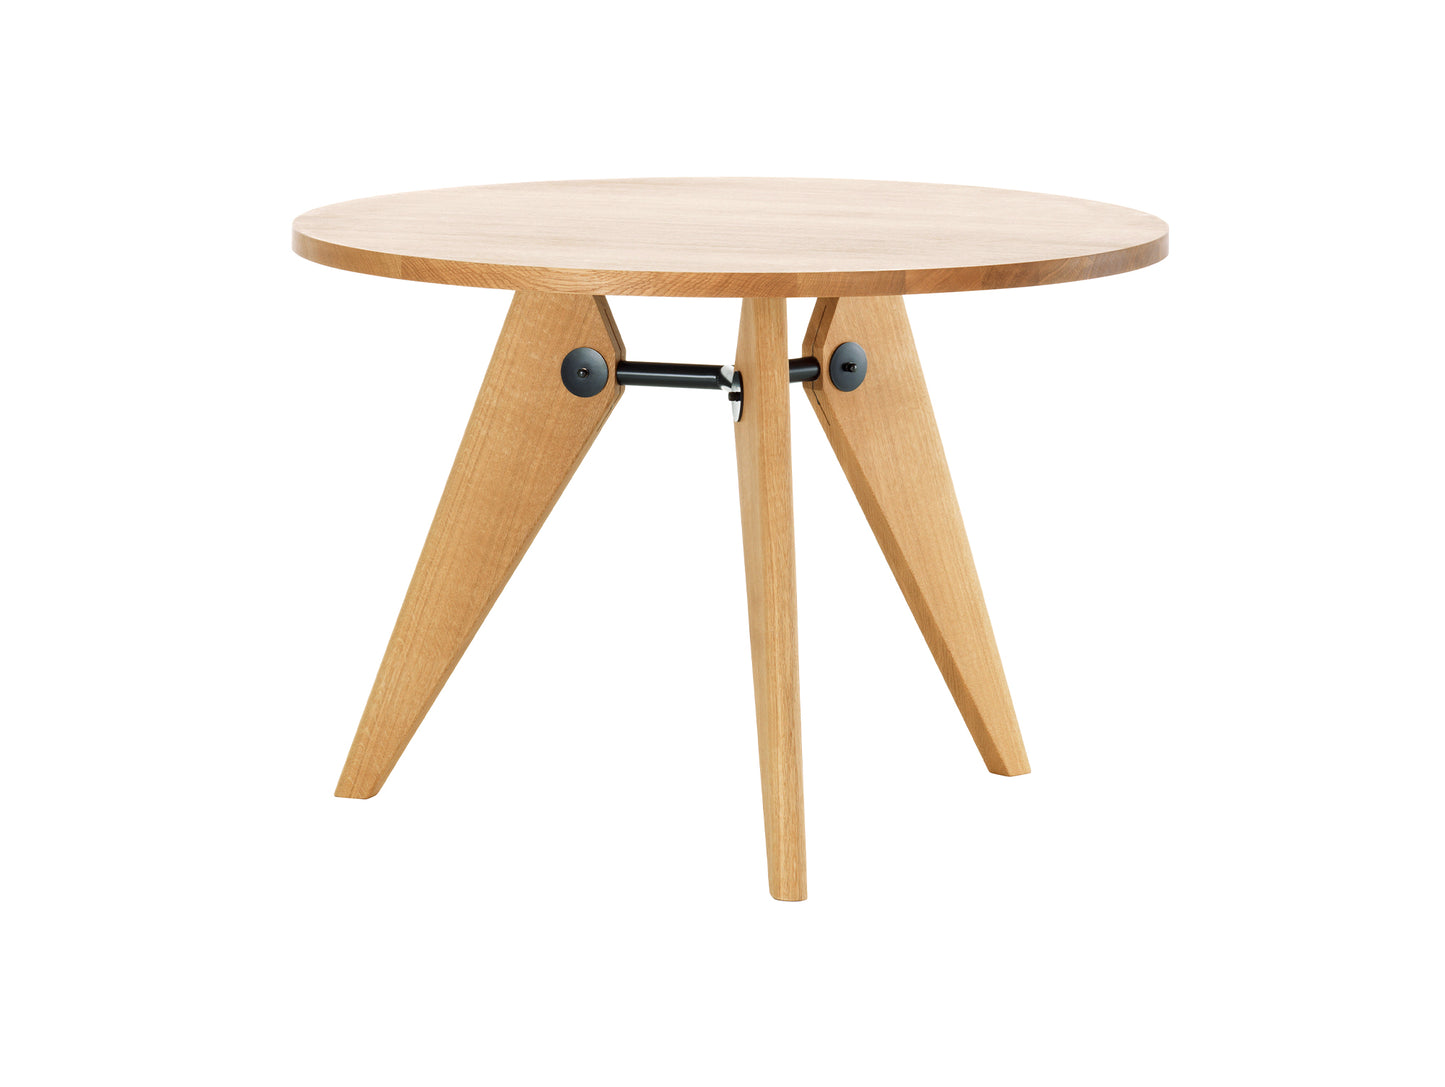 Guéridon Table by Vitra - Oiled Oak / Diameter 105cm